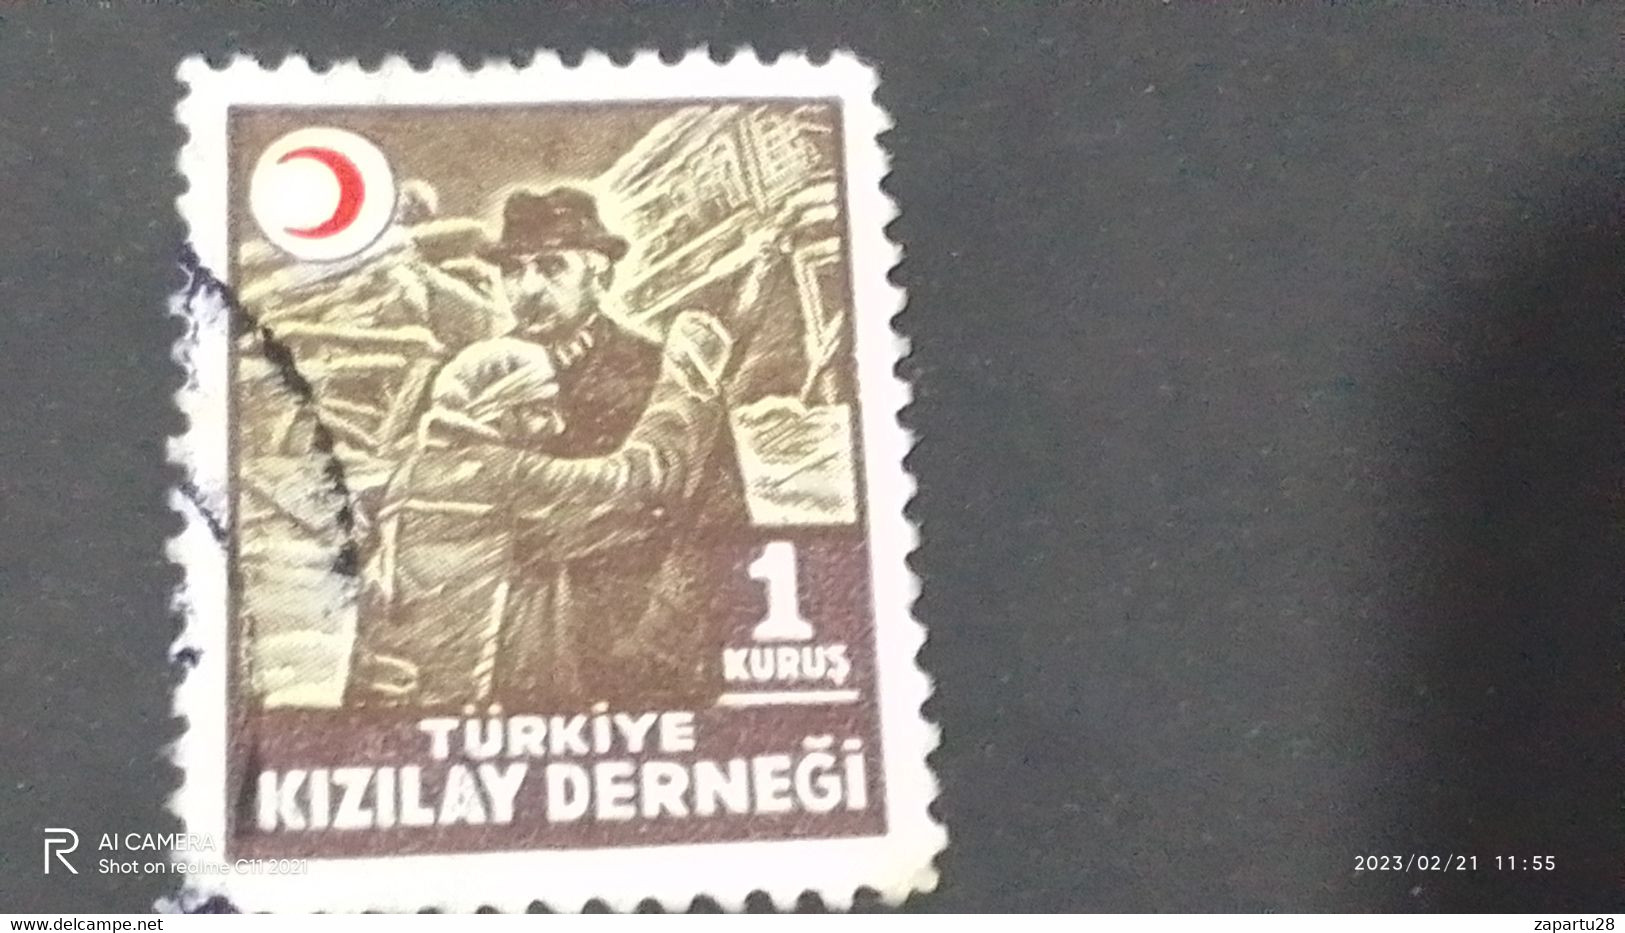 TÜRKEY--YARDIM PULLARI-1930-50-    1K   ÇOCUK ESİRGEME PULU  DAMGALI - Francobolli Di Beneficenza